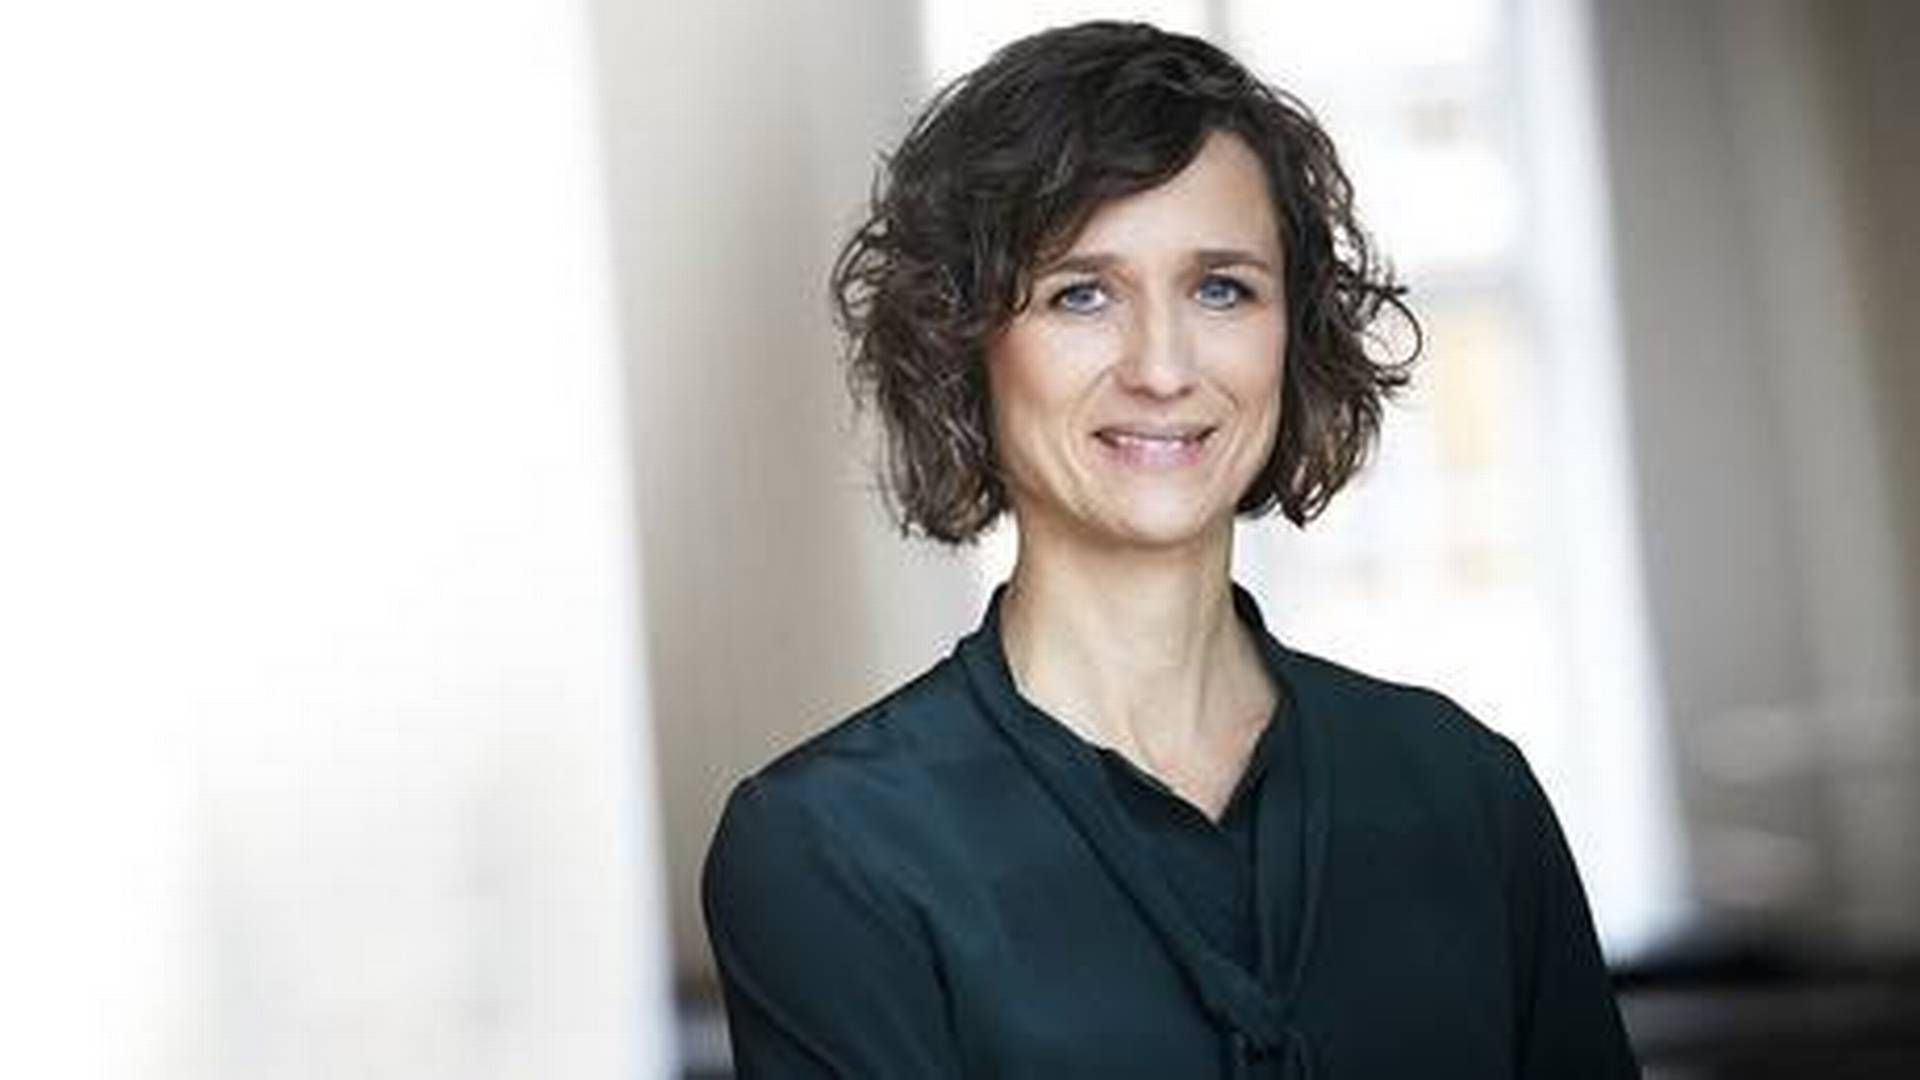 Birgitte Søgaard Holm, head of Investment and Savings at Finans Danmark. | Photo: Finans Danmark/PR